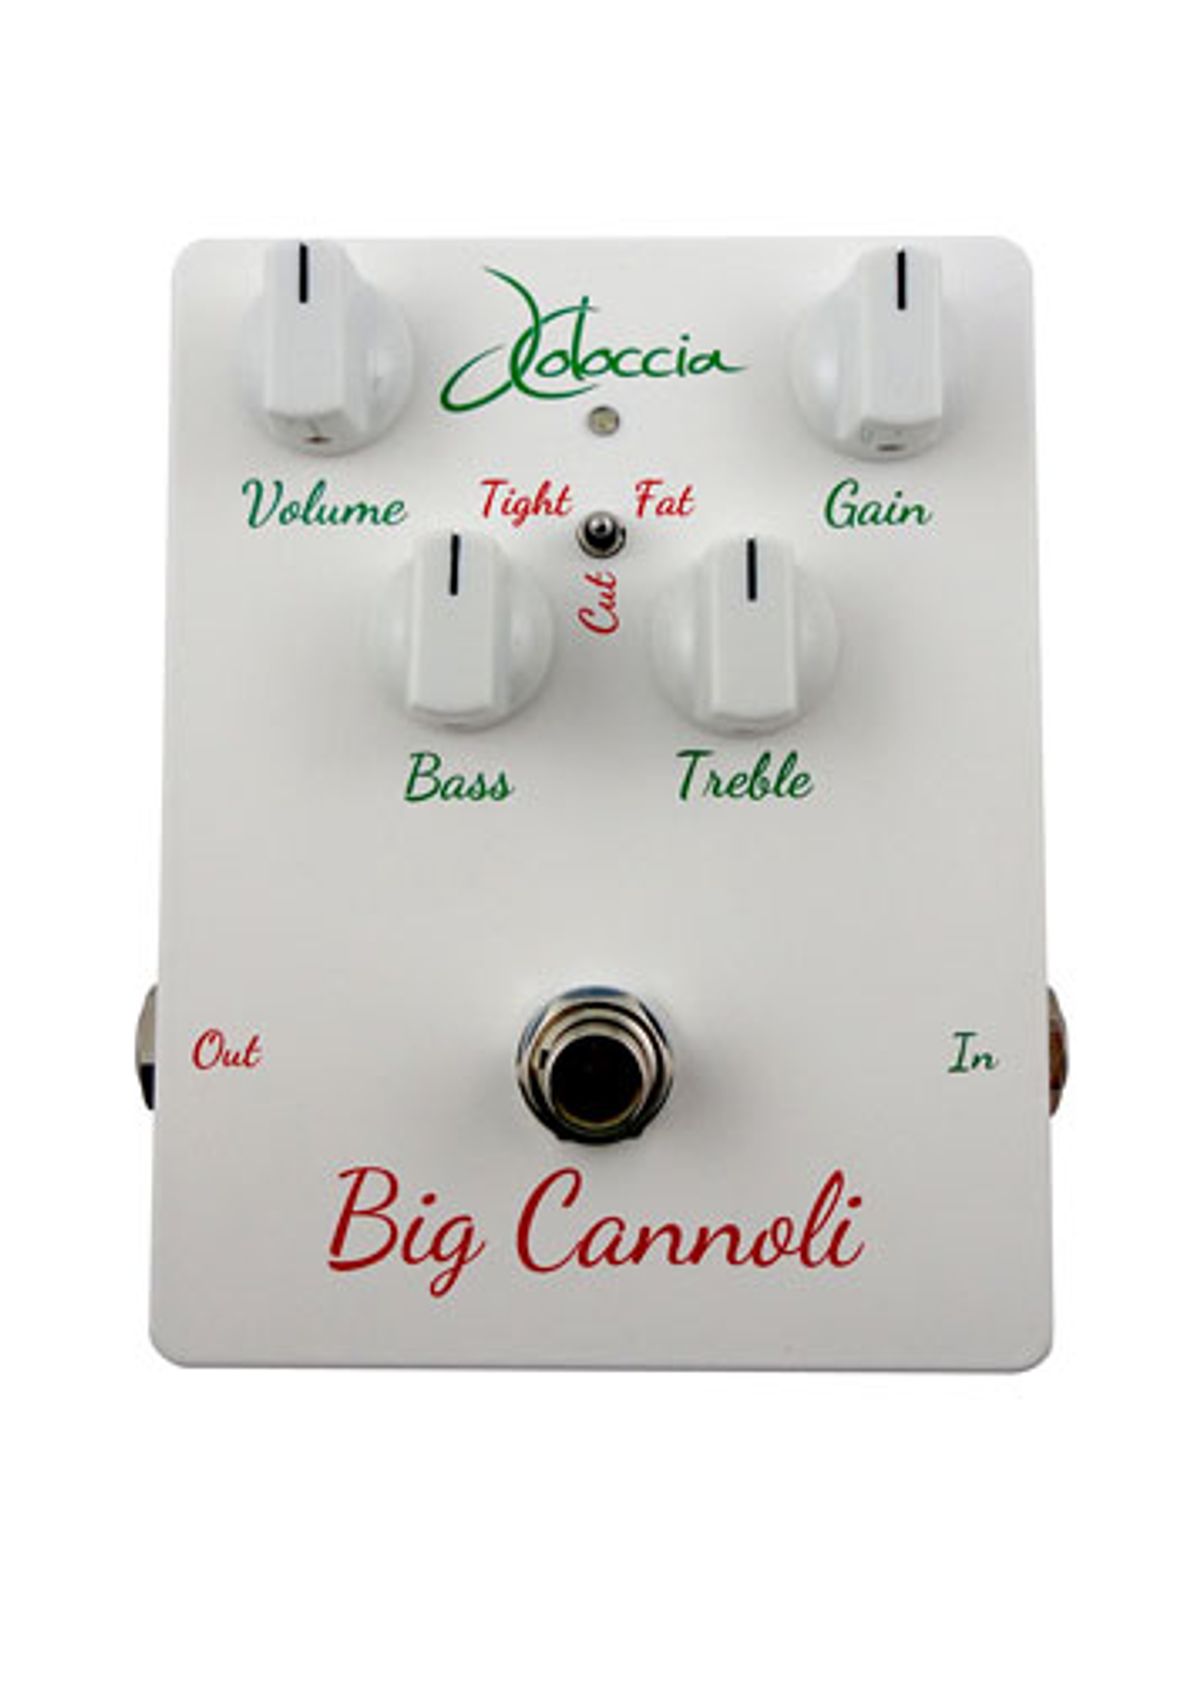 JColoccia Guitars Introduces the Big Cannoli Overdrive